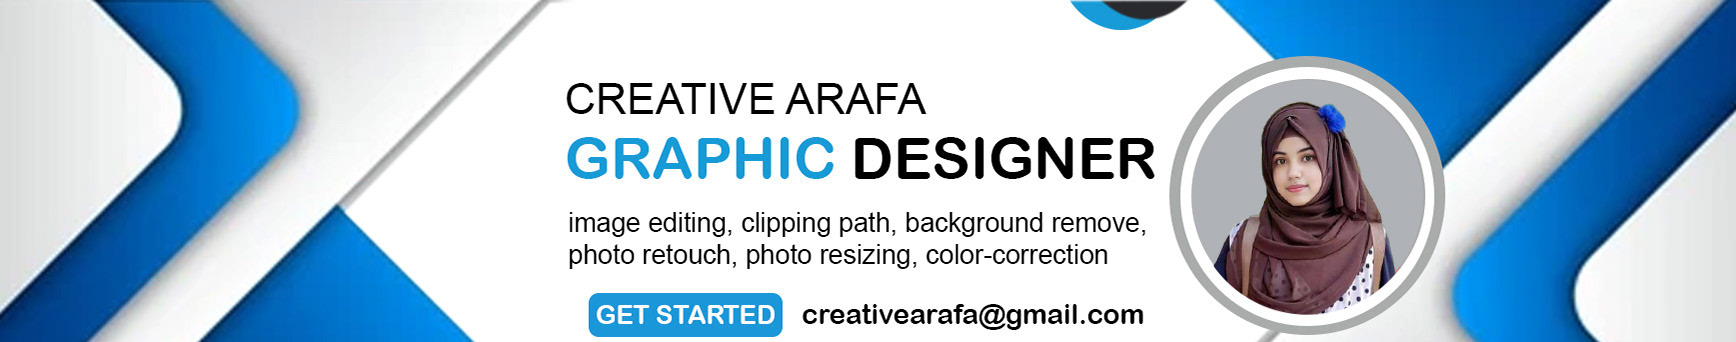 creative arafa's profile banner